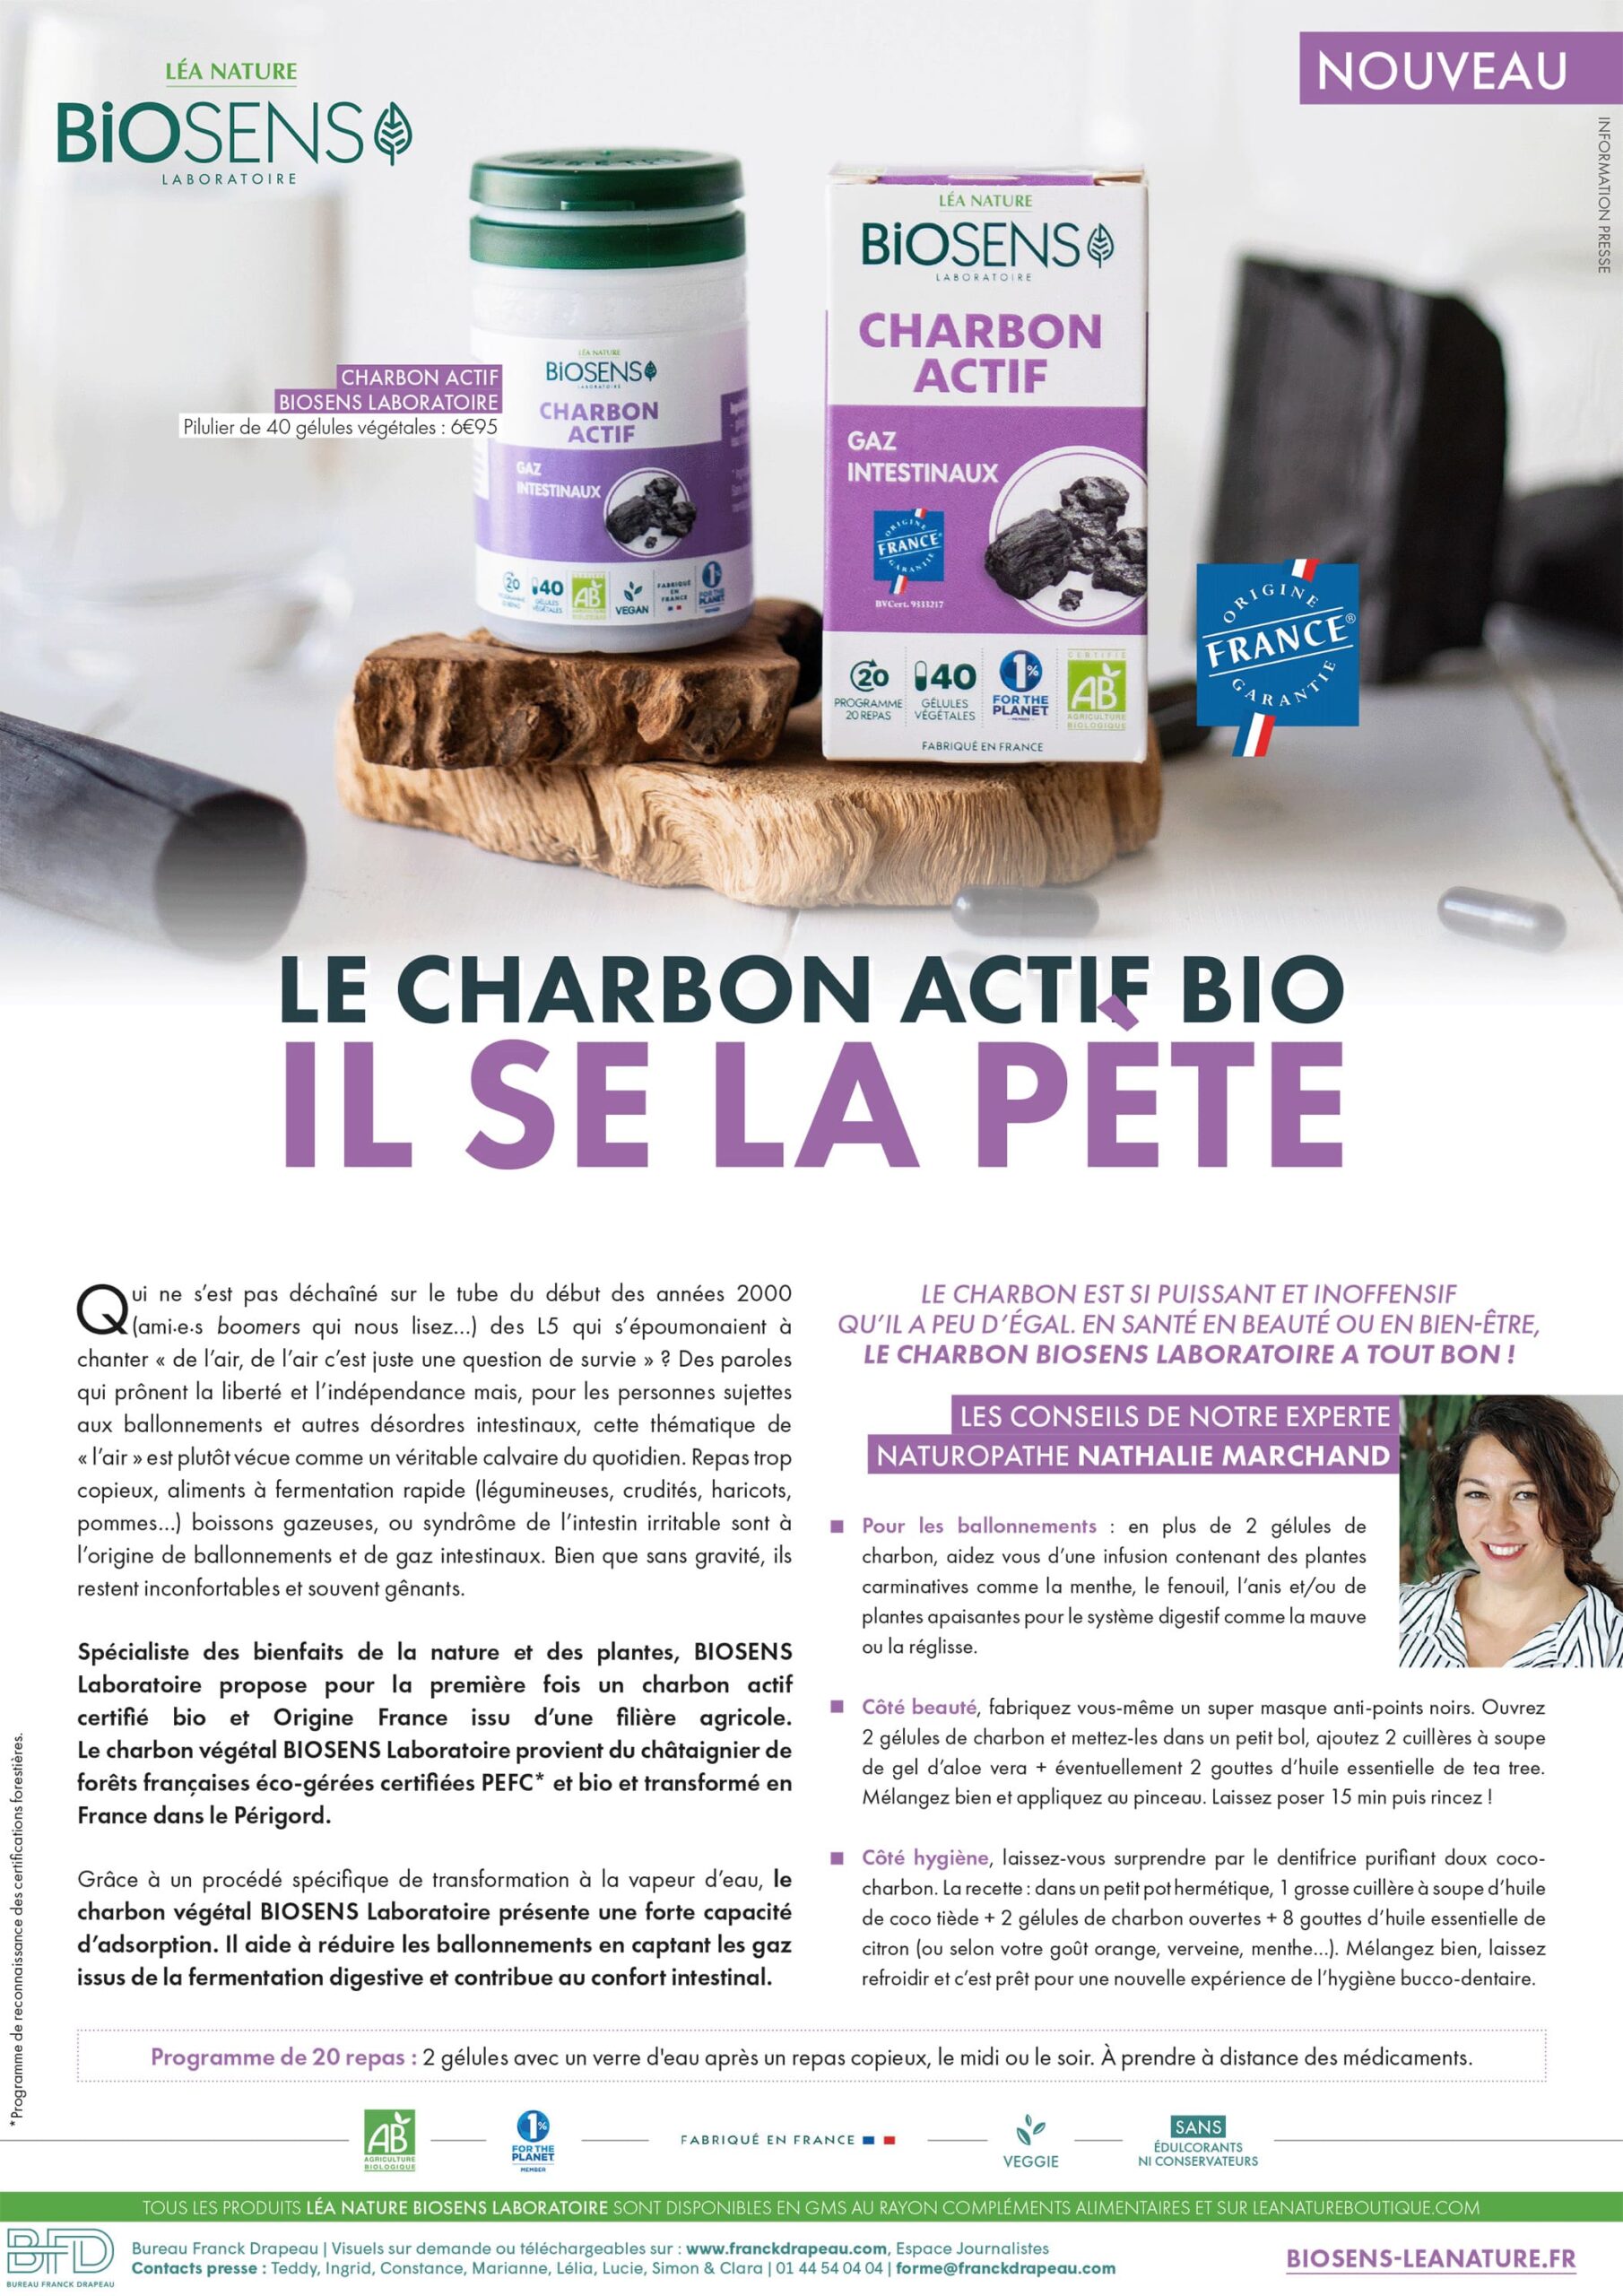 Biosens Laboratoire | Charbon actif bio